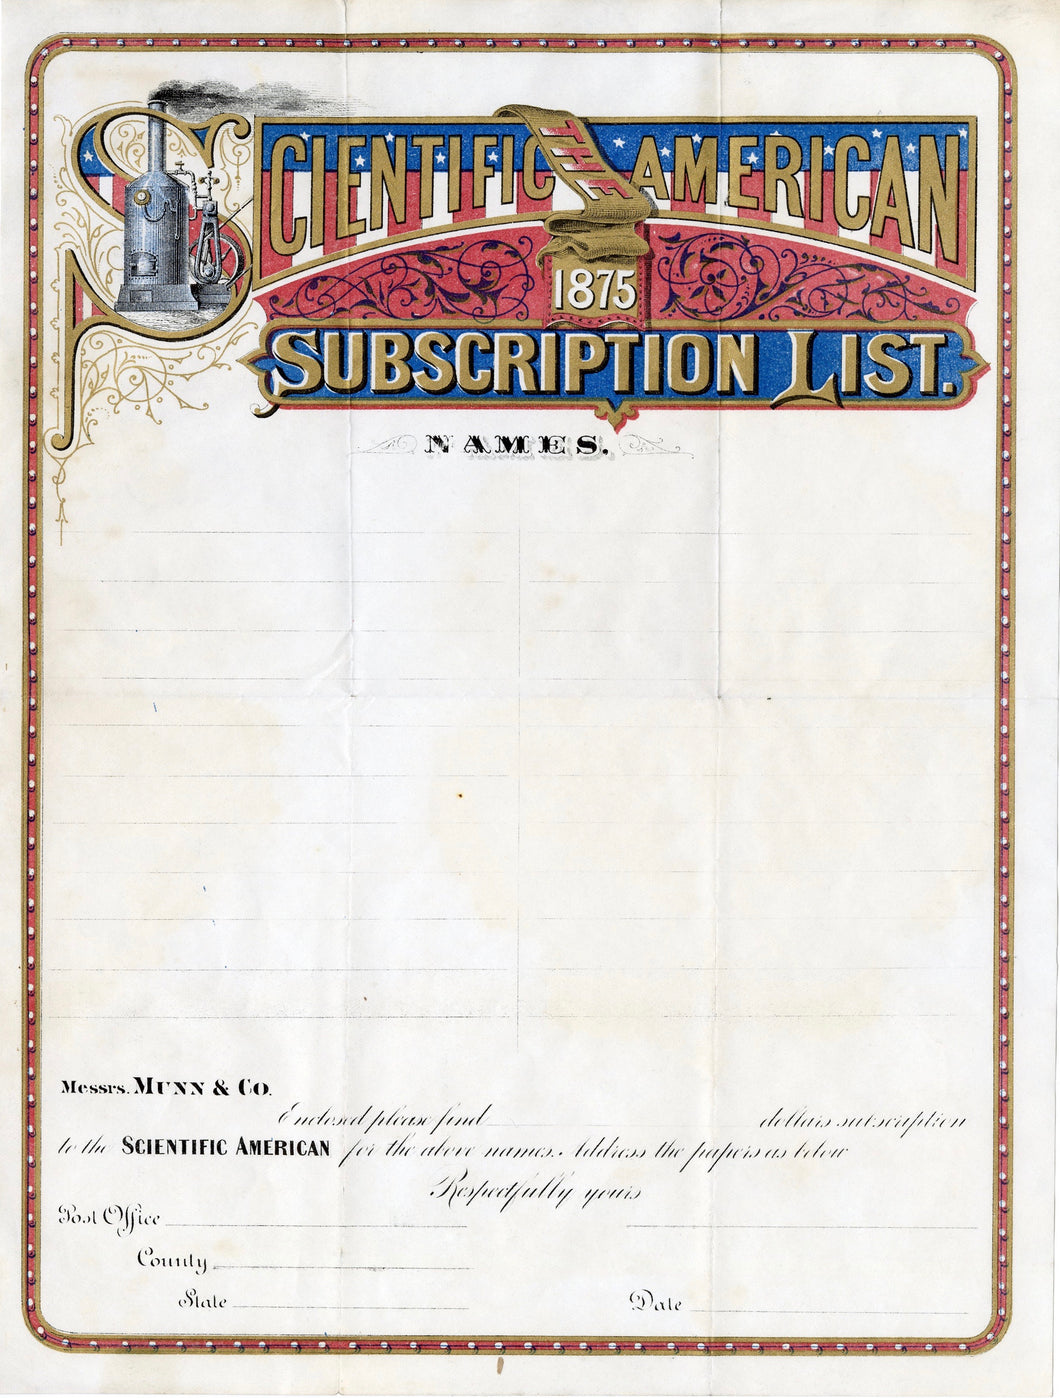 1875 SCIENTIFIC AMERICAN MAGAZINE SUBSCRIPTION LIST, Blank Letterhead